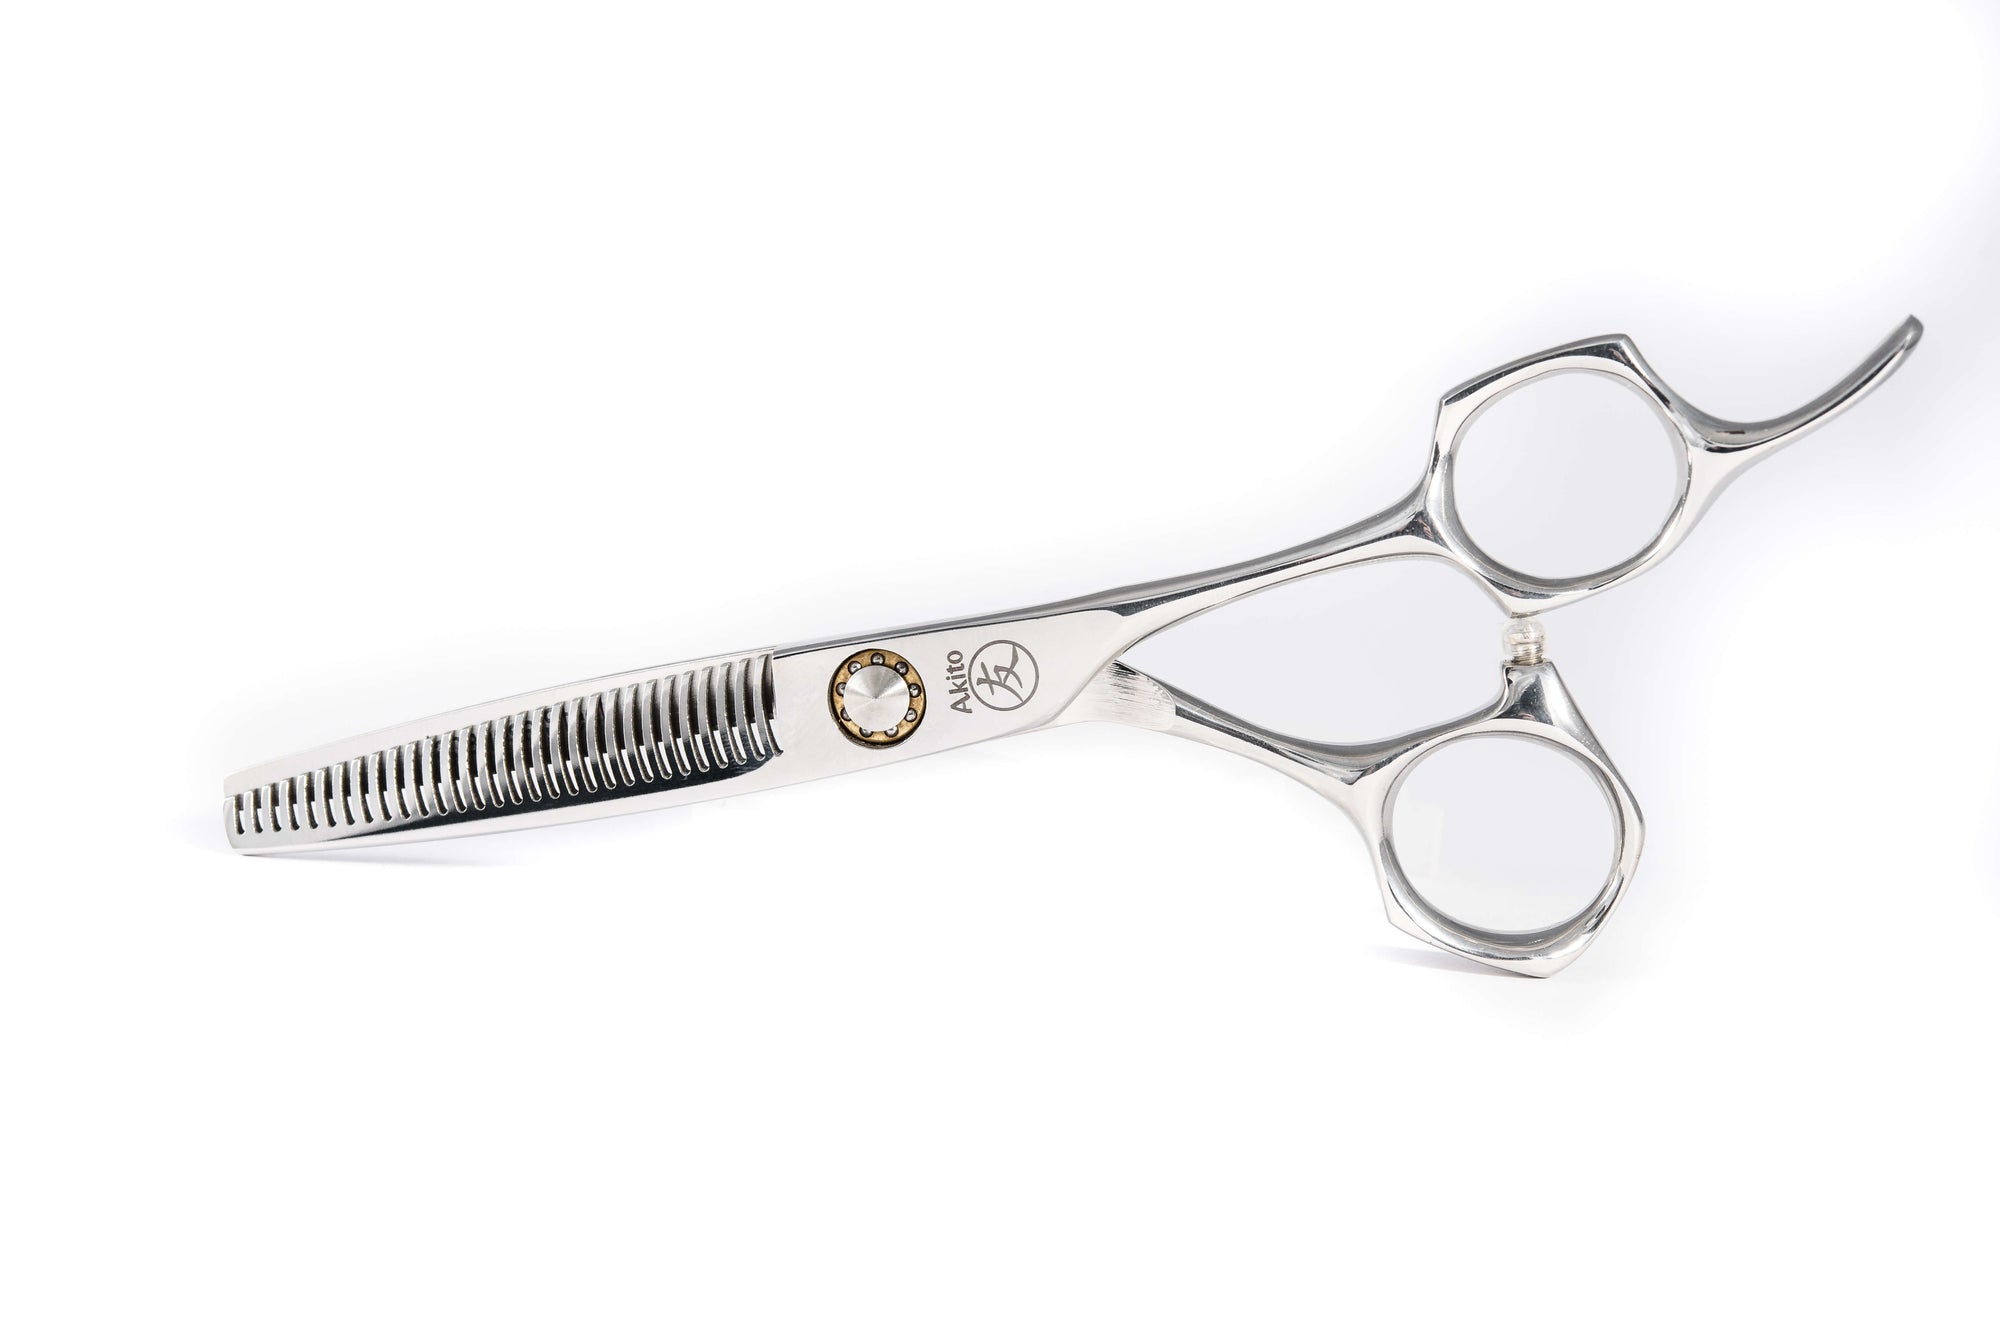 TX-01-6.0-30T-scissors-onwhite